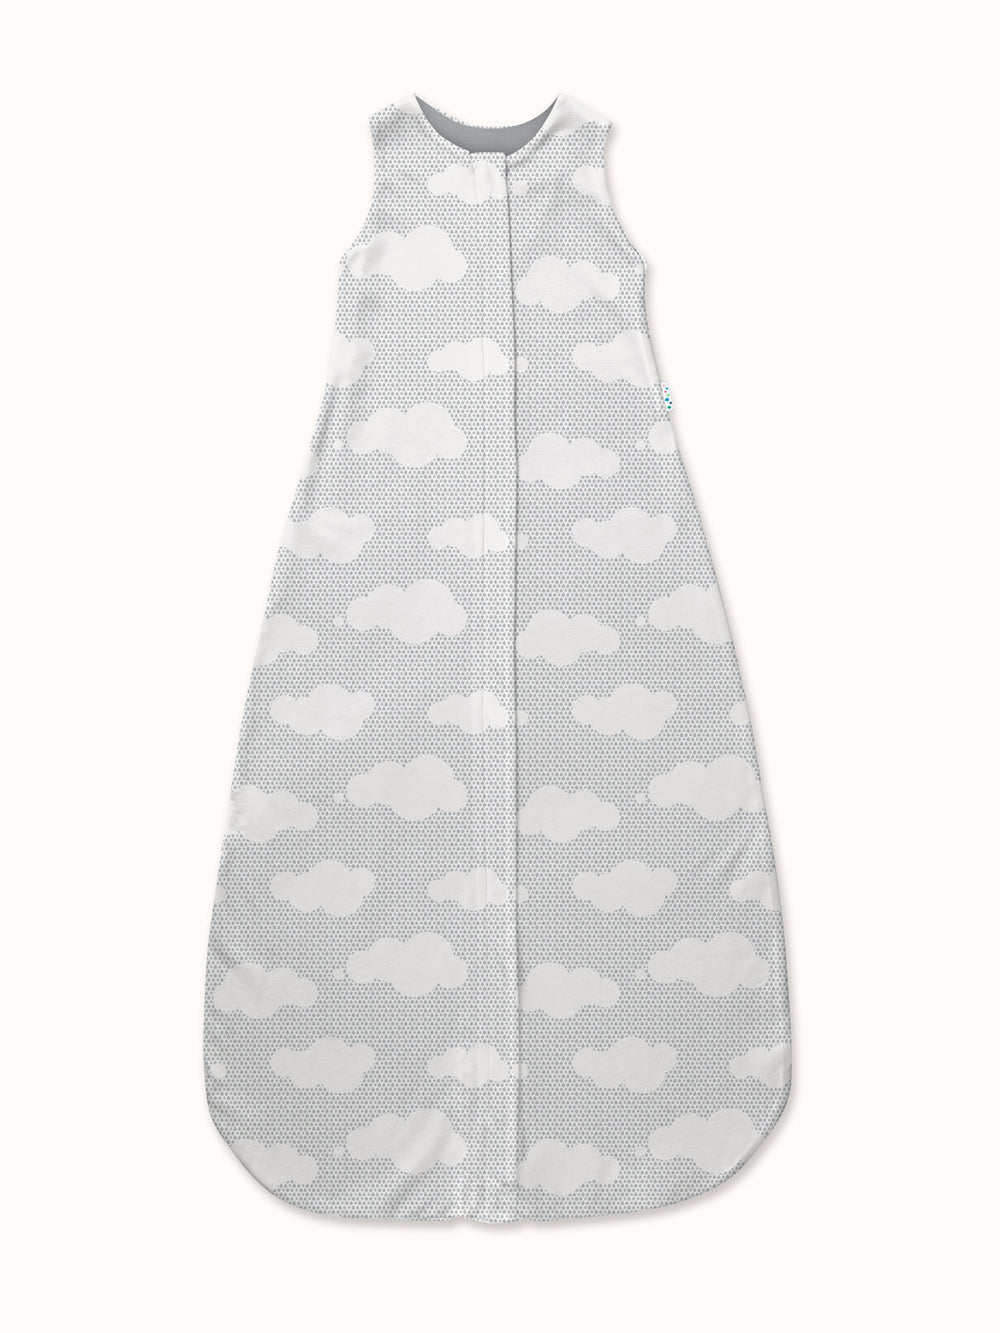 Merino Toddler Sleeping Bag by Superlove Merino  cloud #colour_silver-linings